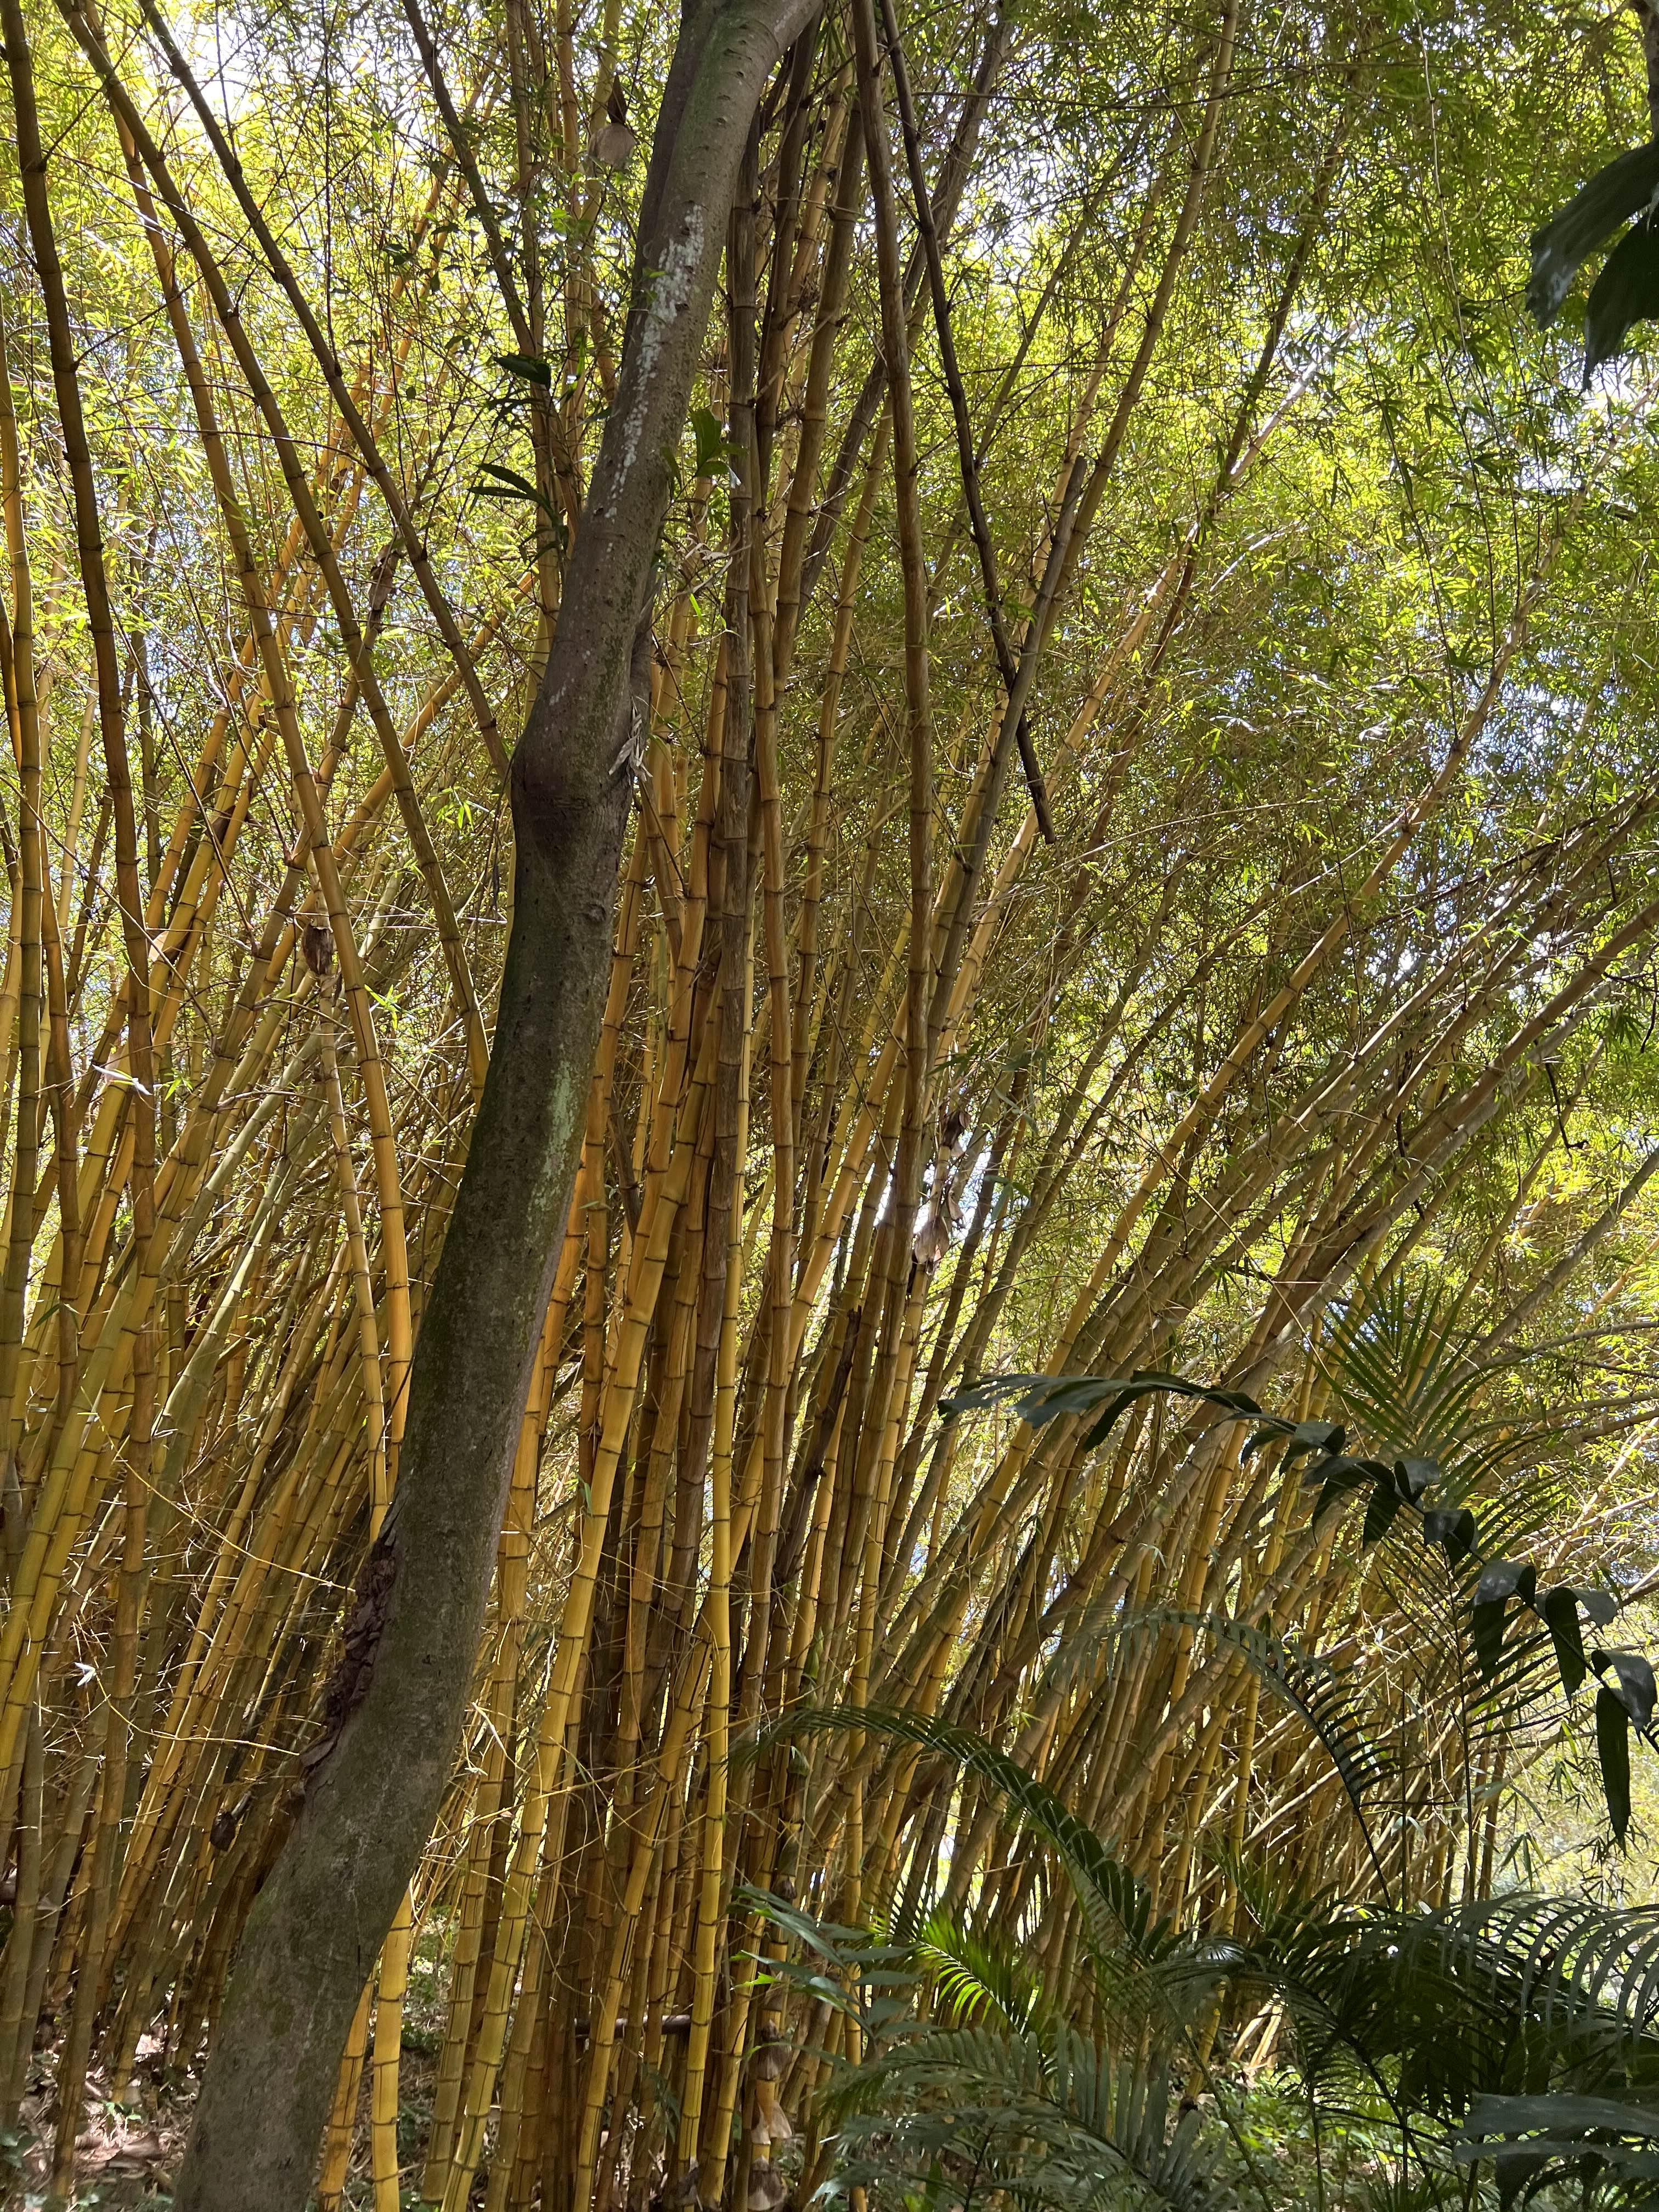 Bamboo Room 이라 불리는 곳